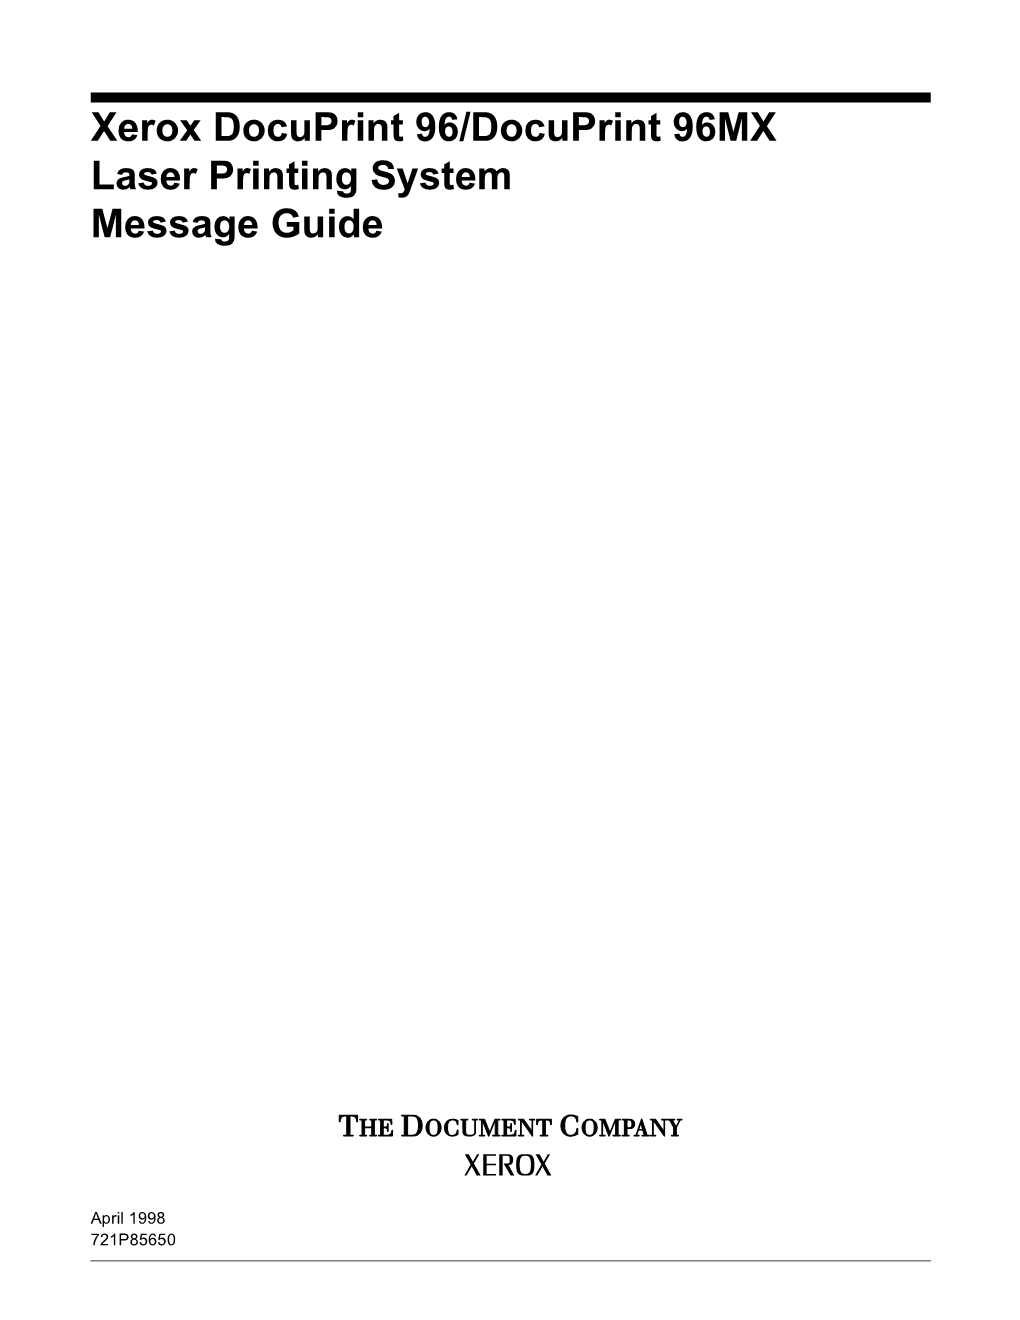 Xerox Docuprint 96/Docuprint 96MX Laser Printing System Message Guide